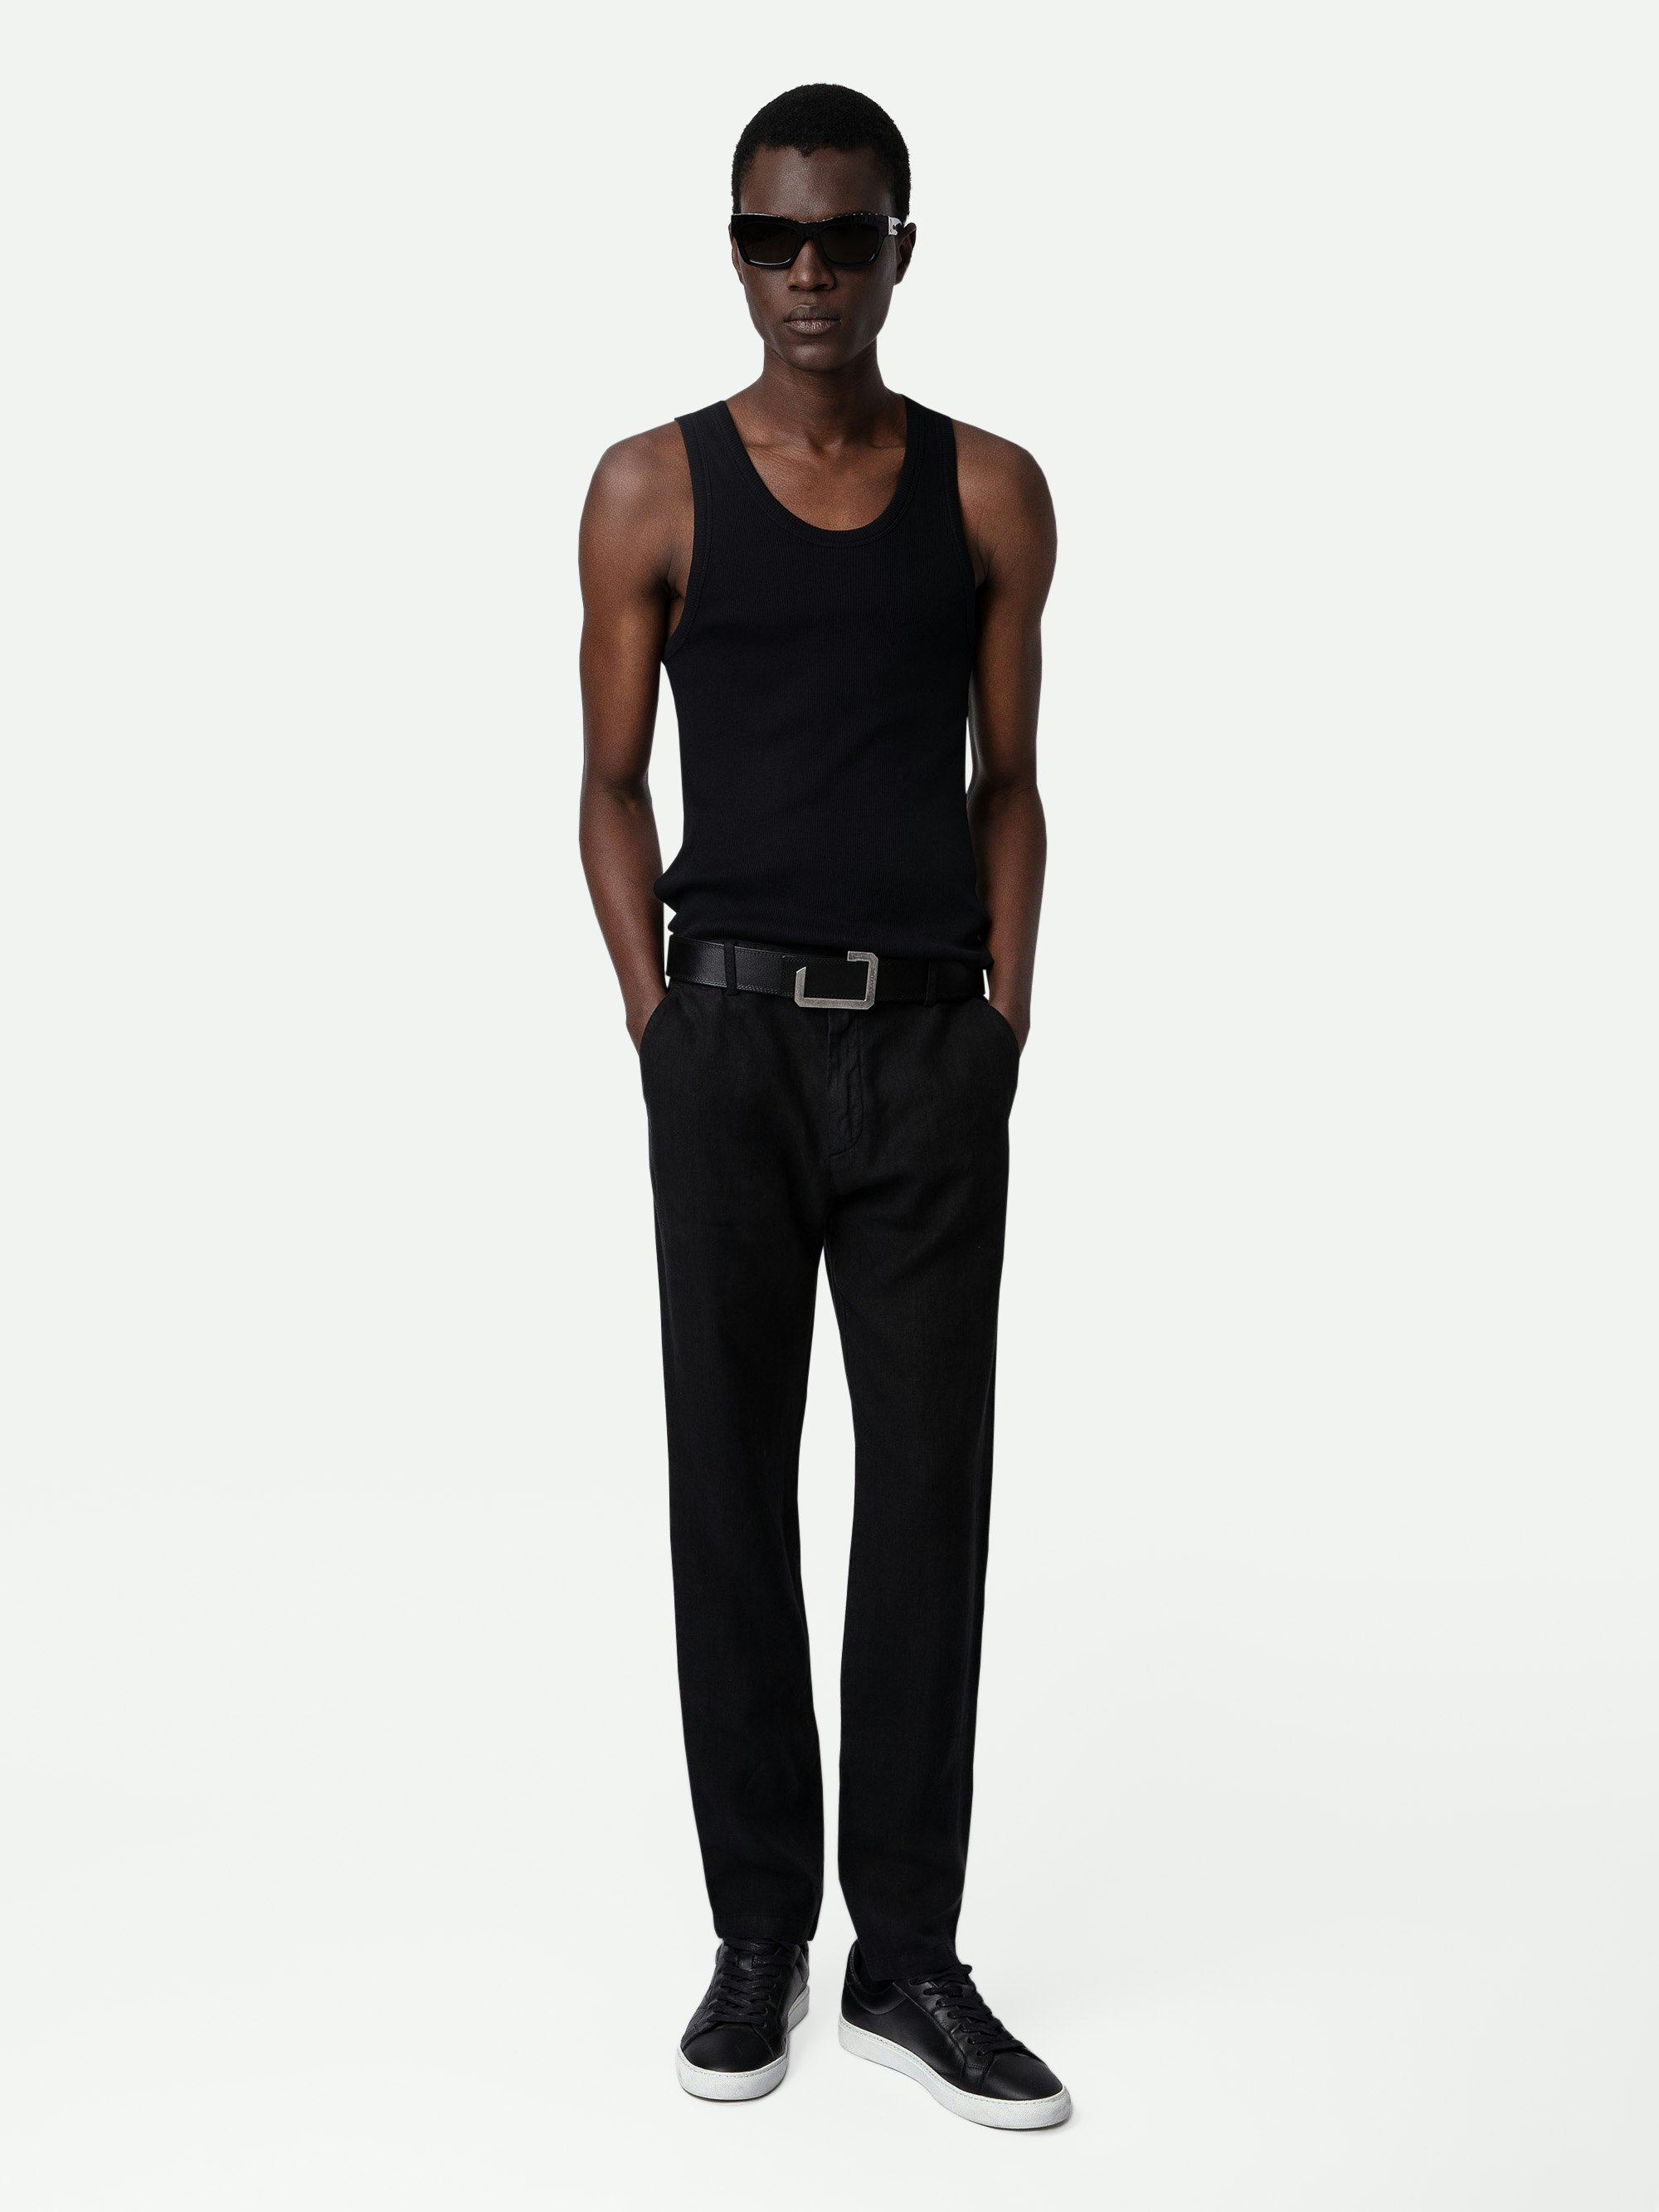 Pierce Linen Pants - Black washed linen pants with pockets.